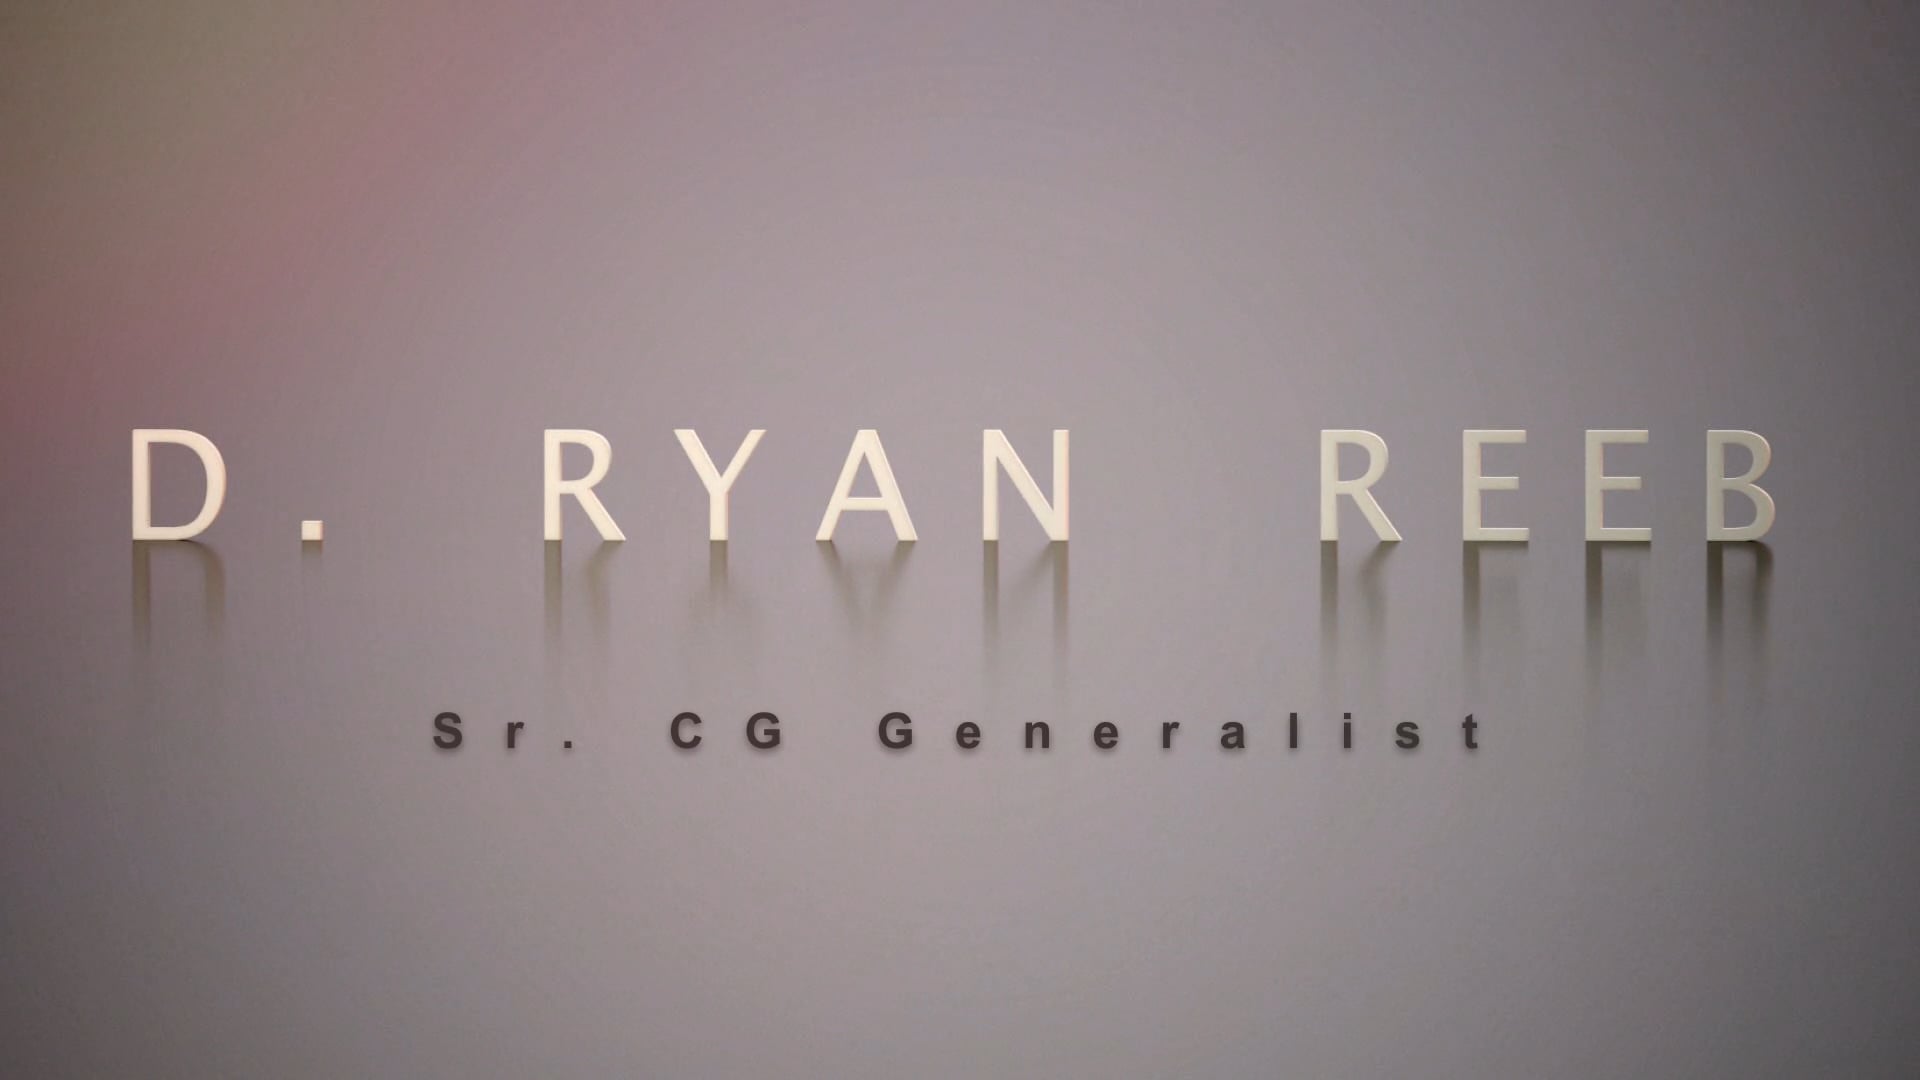 D. Ryan Reeb 2020 CG Generalist demo reel